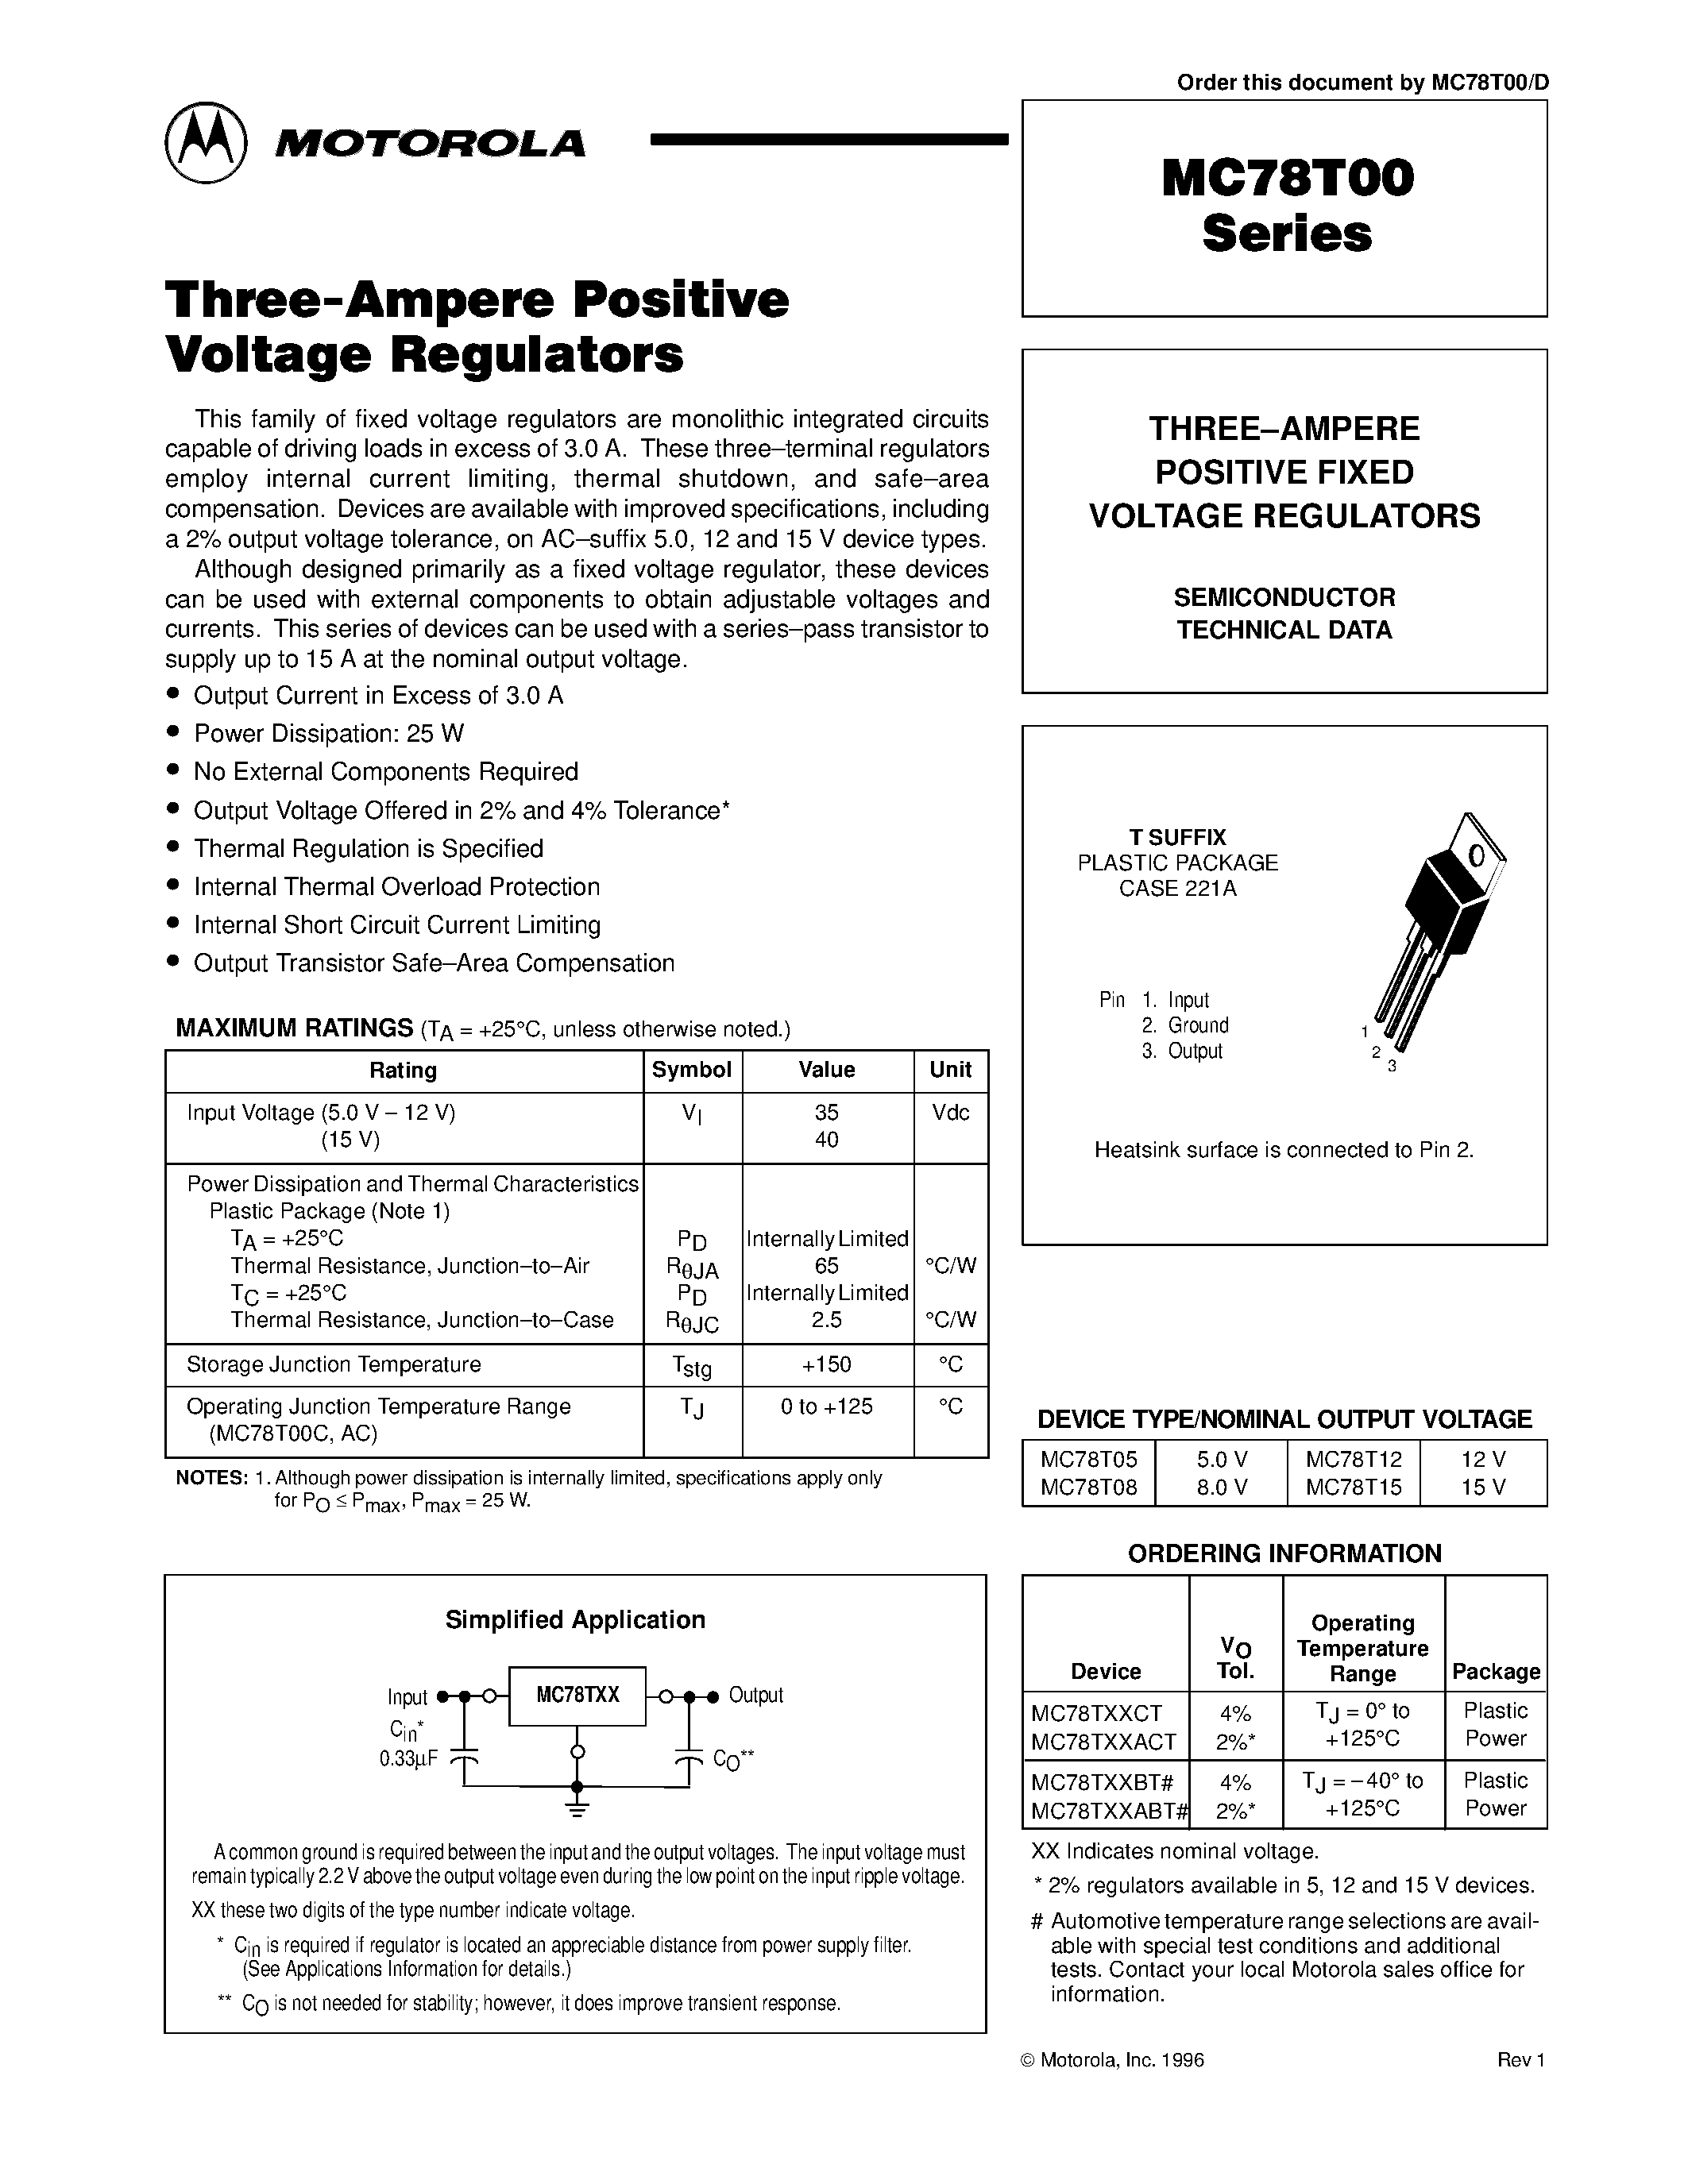 Даташит MC78T15CT - THREE-AMPERE POSITIVE FIXED VOLTAGE REGULATORS страница 1